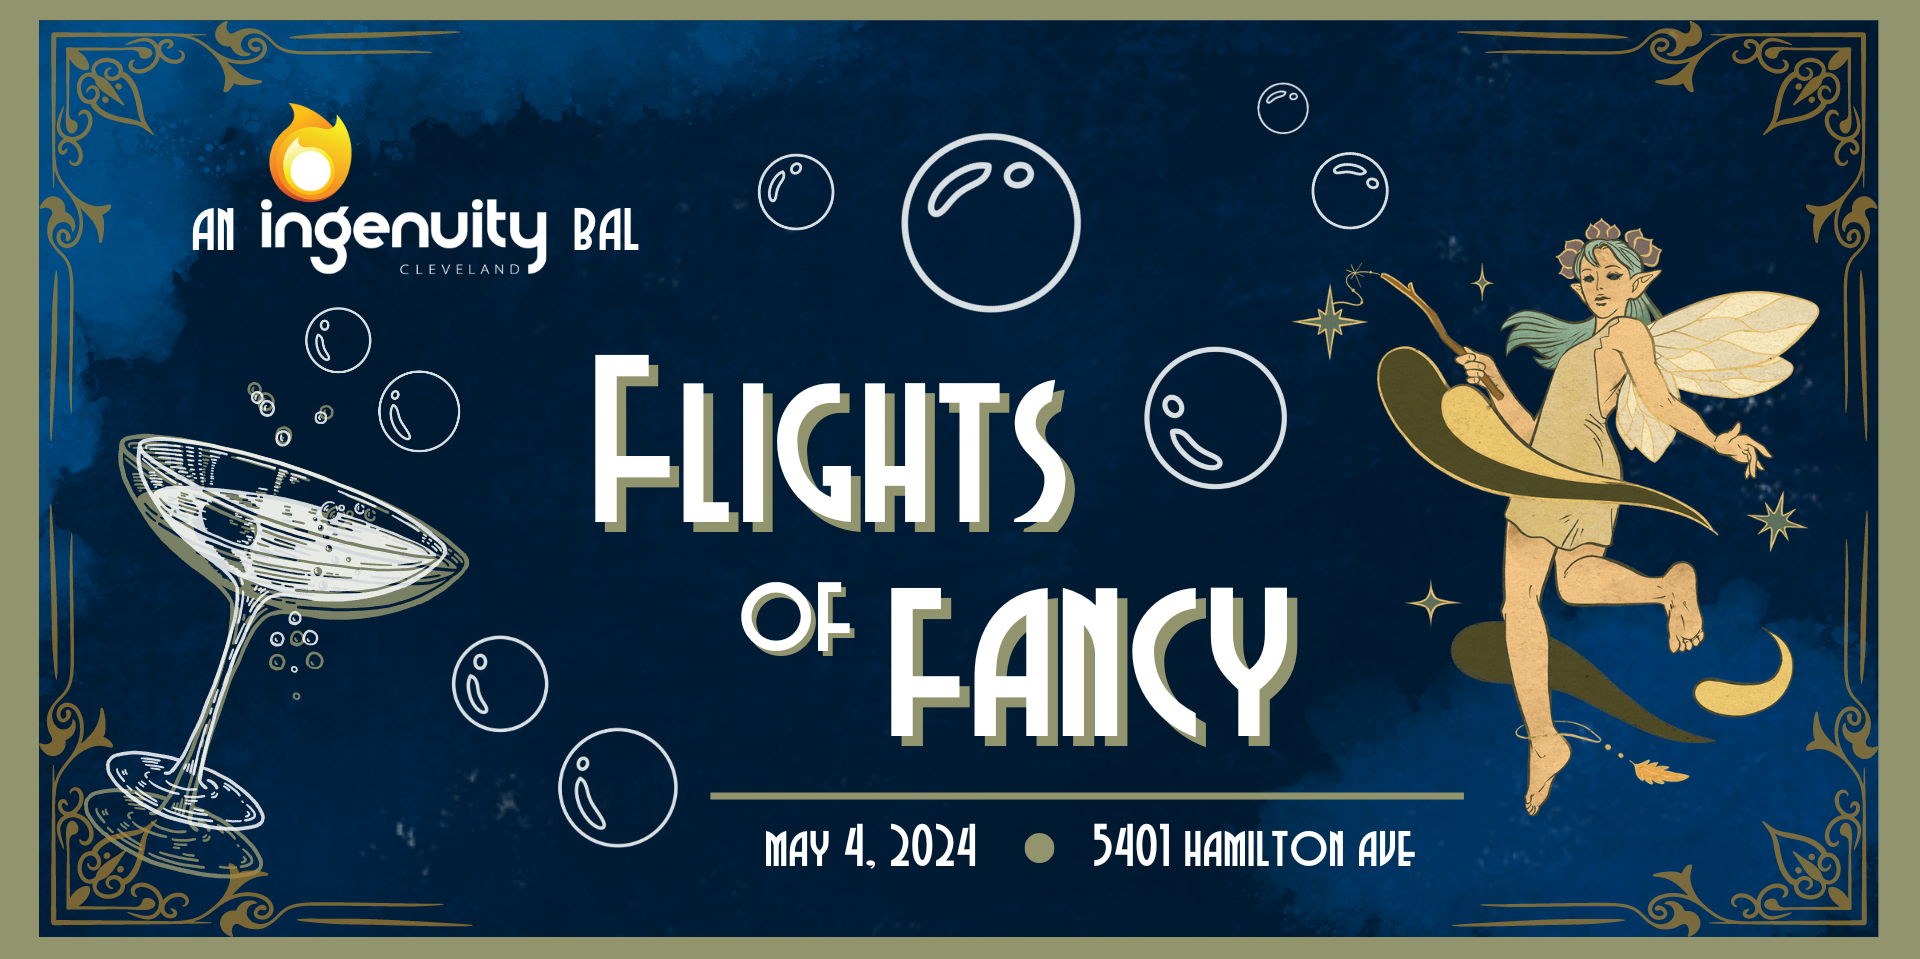 Ingenuity Bal: Flights of Fancy promotional image